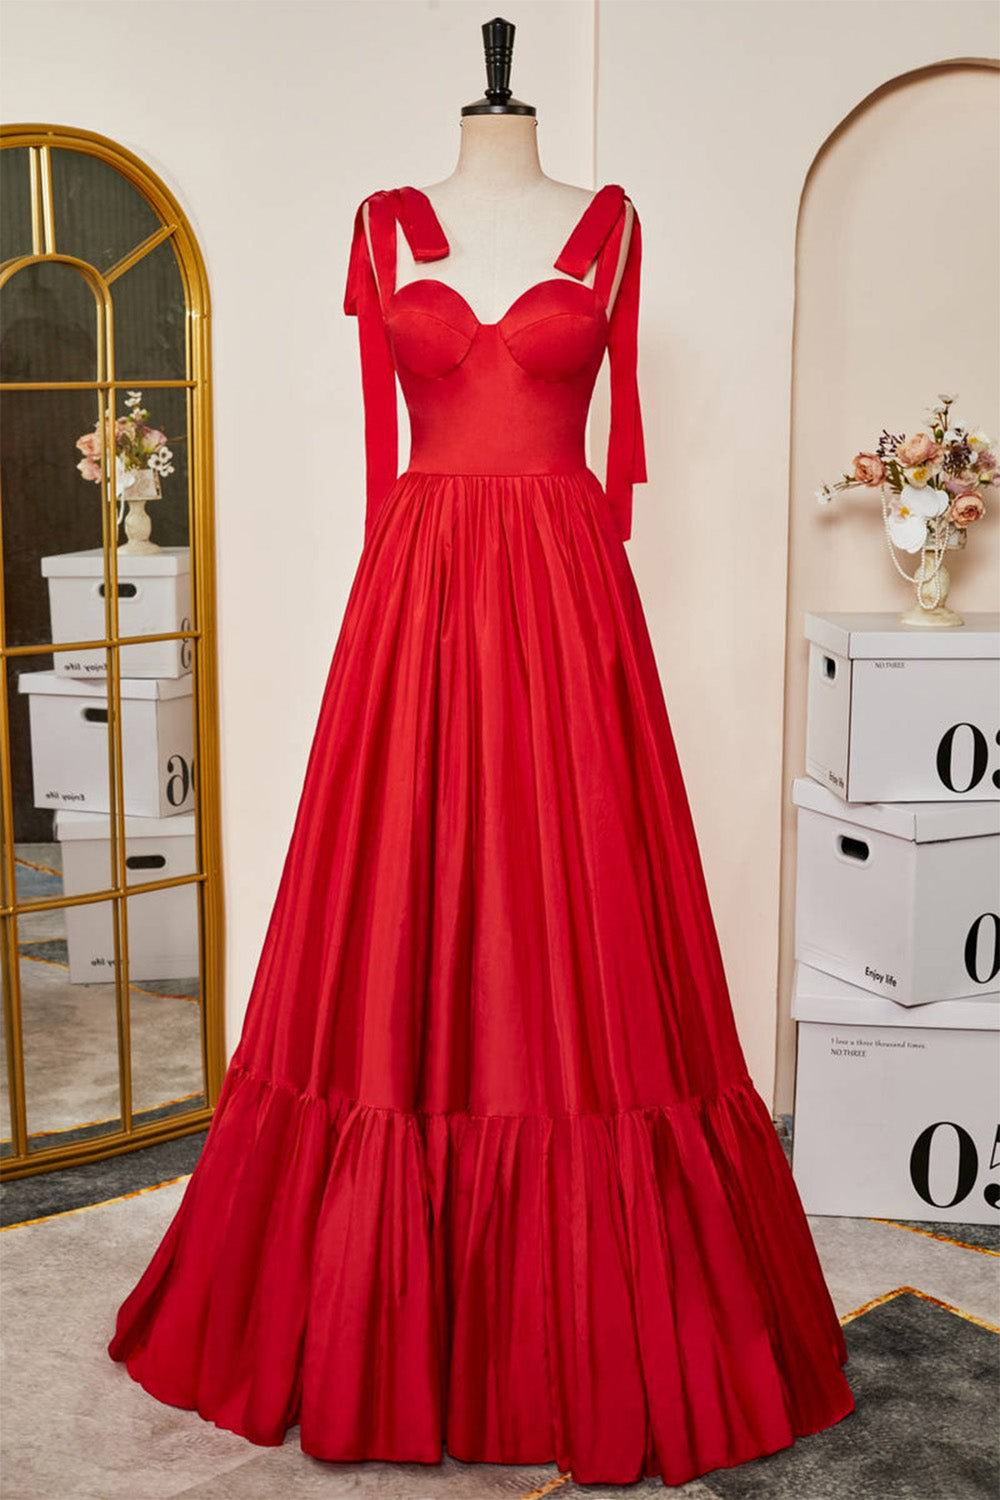 Hebochic Gorgeous Fuchsia Princess Floor Length Prom Dress